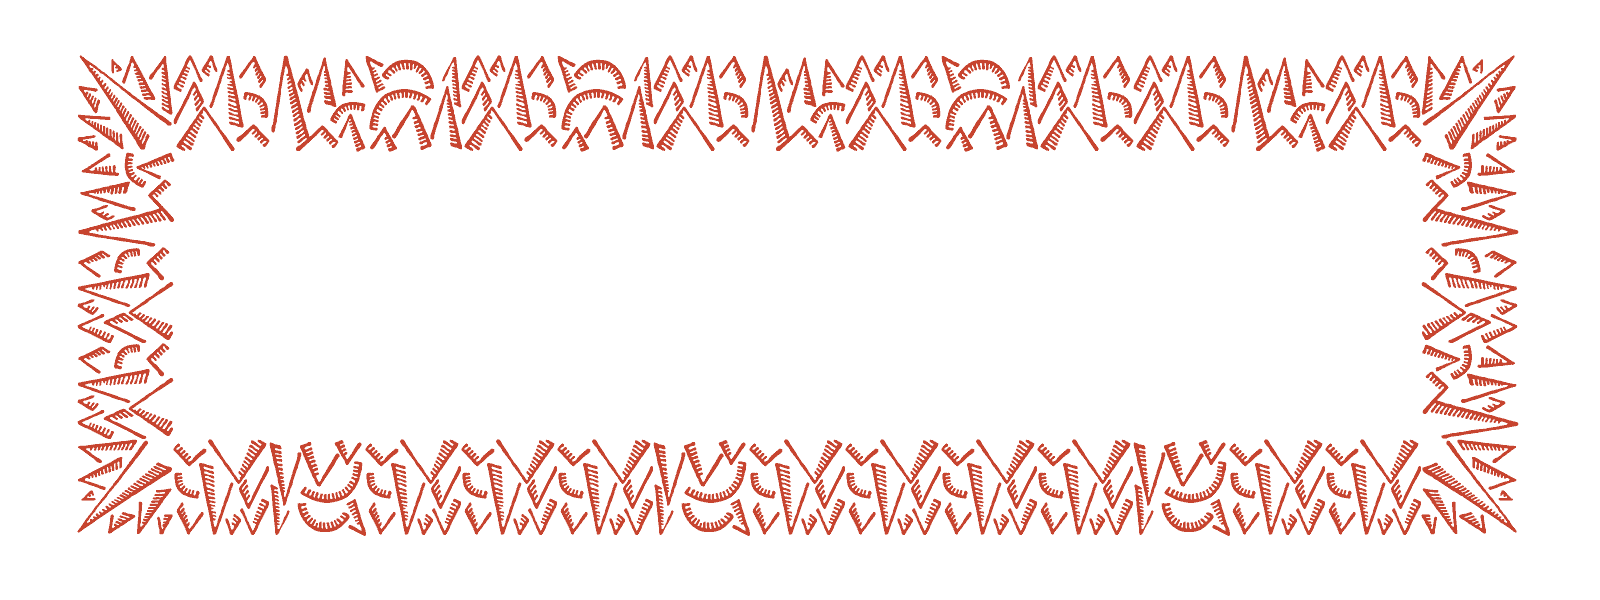 A sample of WF Border Bergland, a decorative border font from the Kraftwerk Press font set